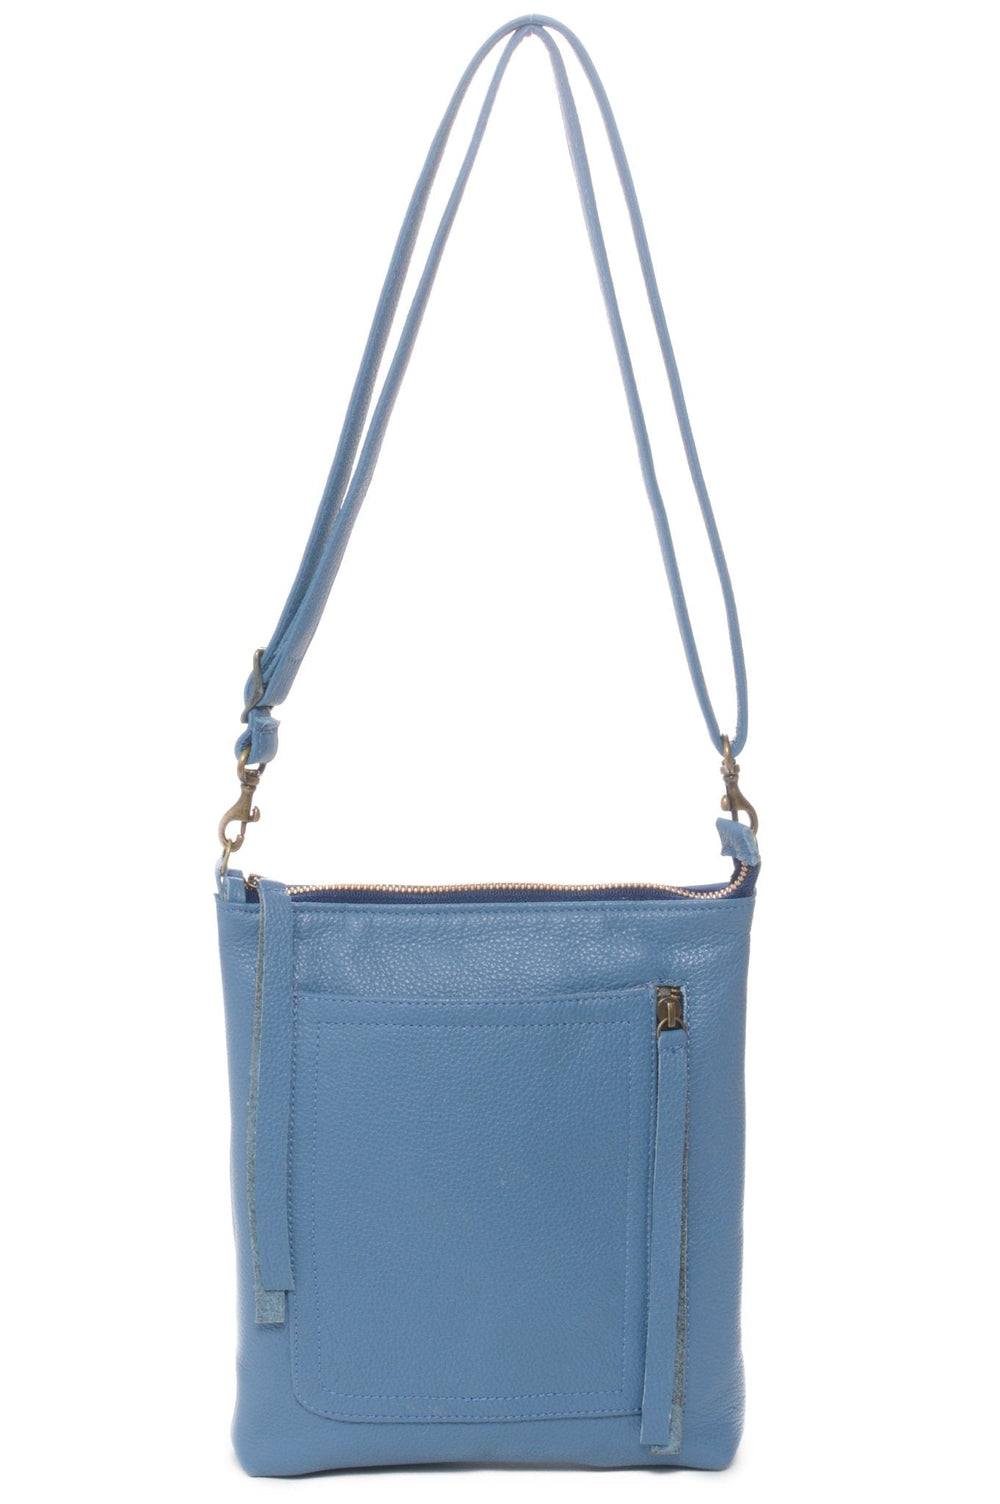 EMMA Aqua Blue GS2 – Carla Mancini Handbags